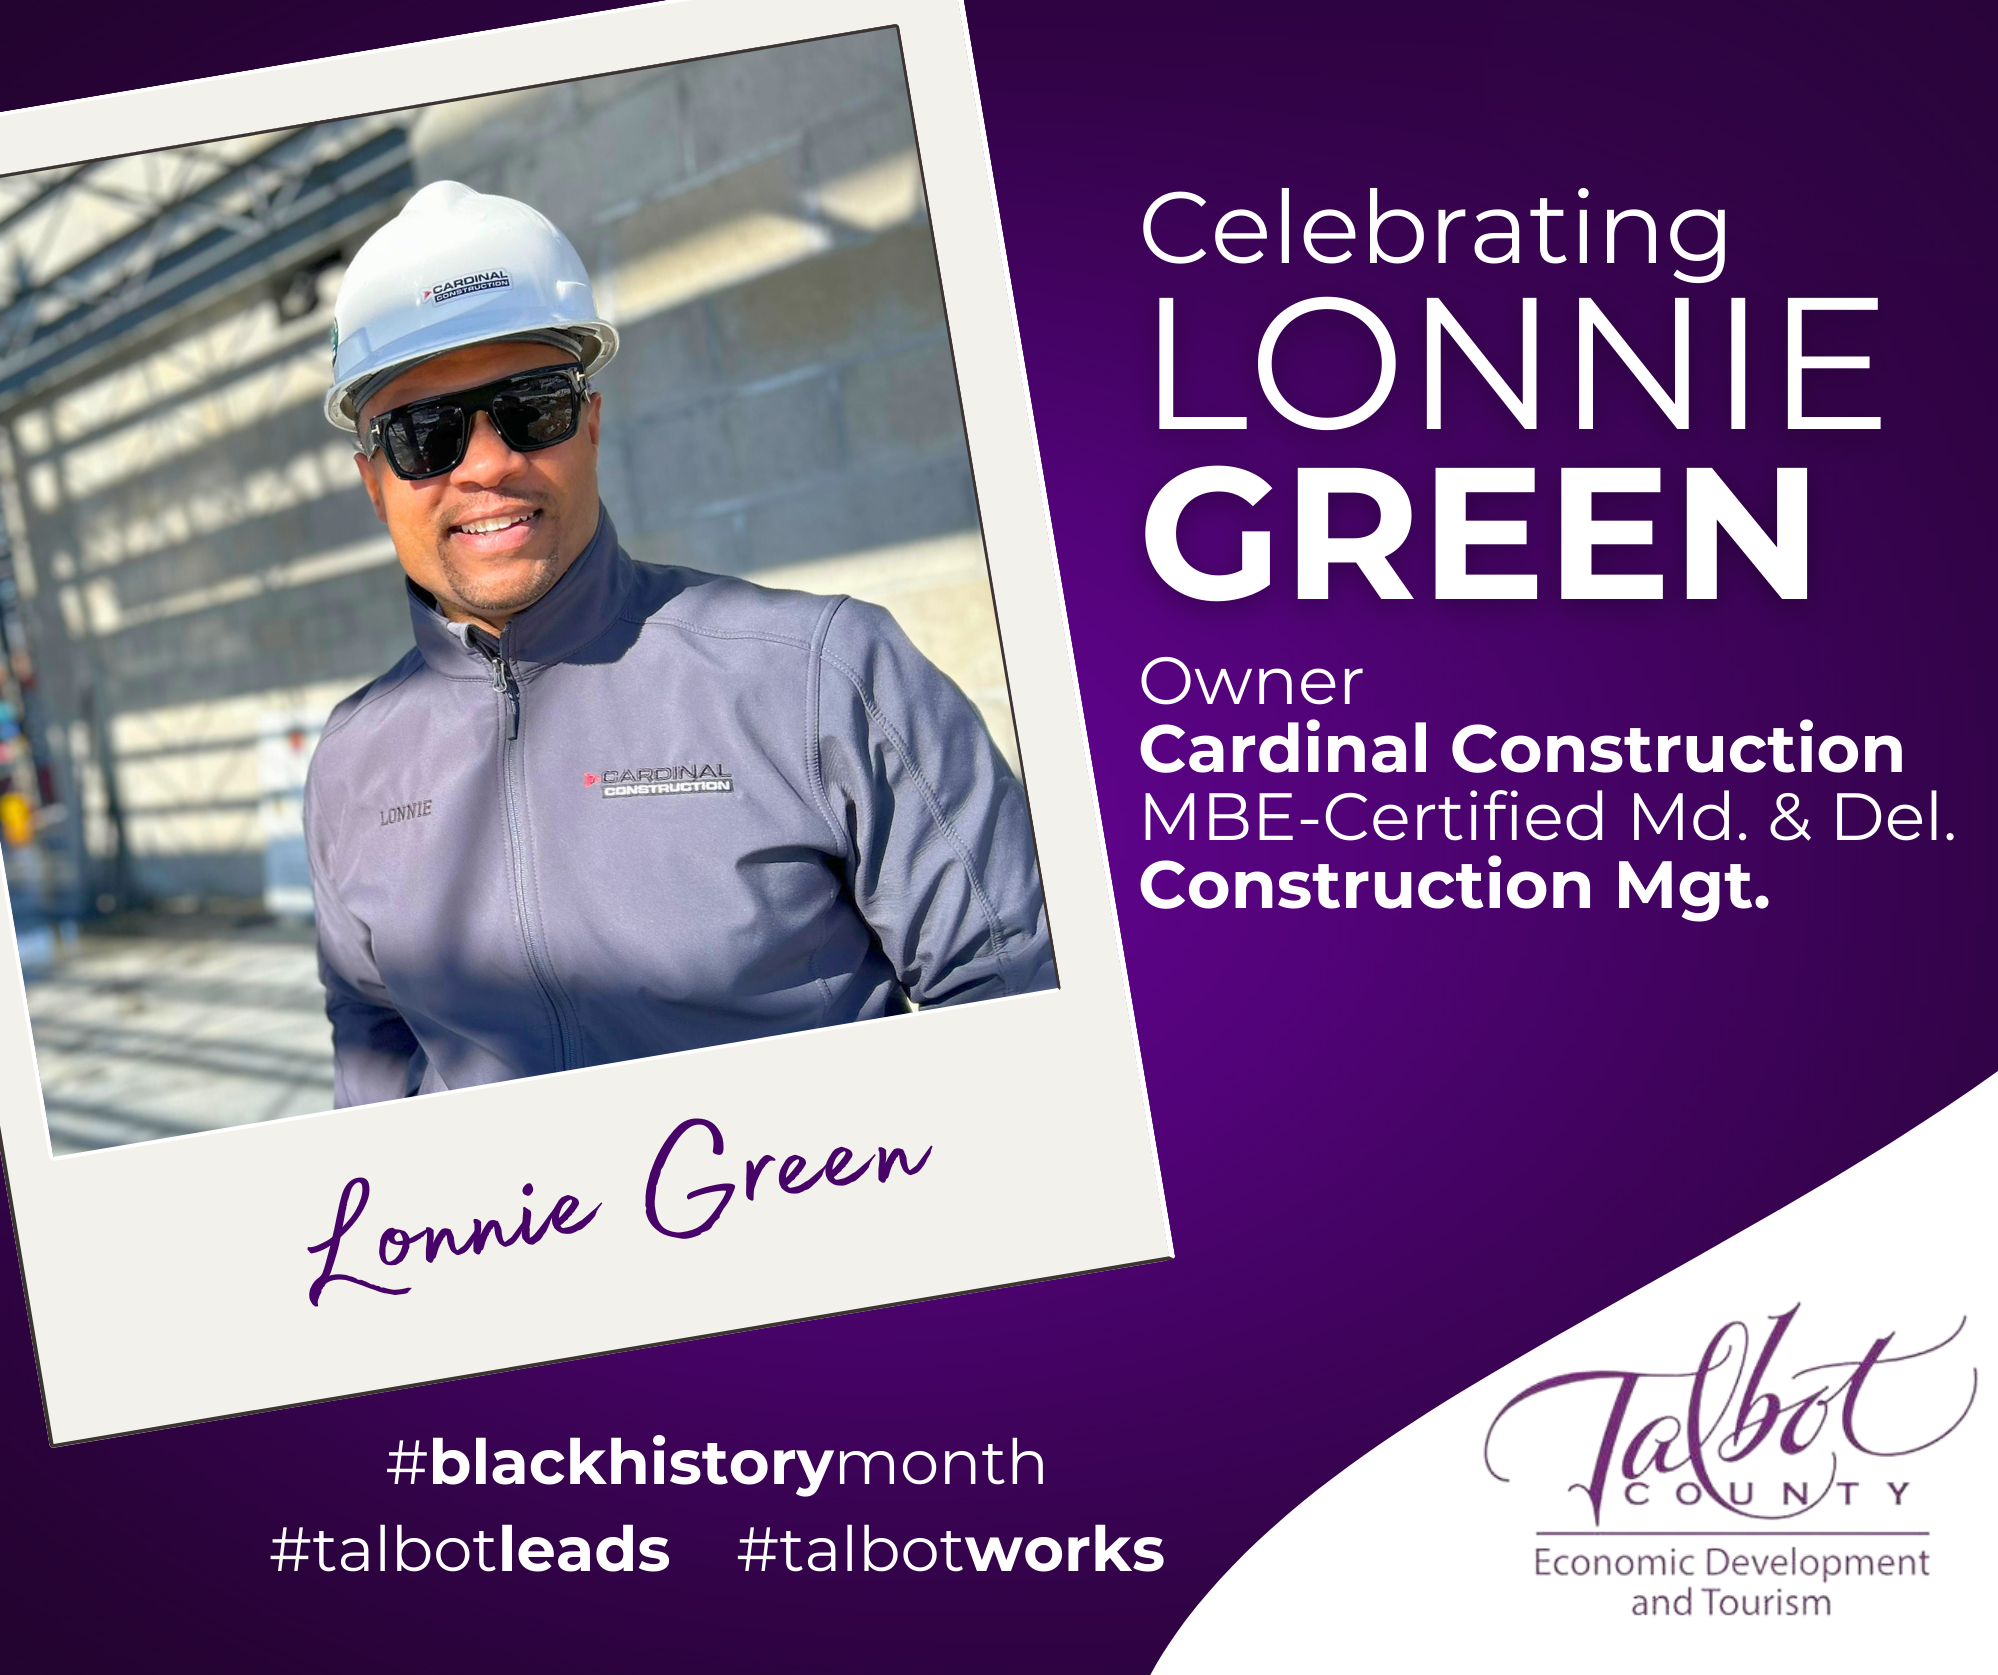 Lonnie Green, Cardinal Construction